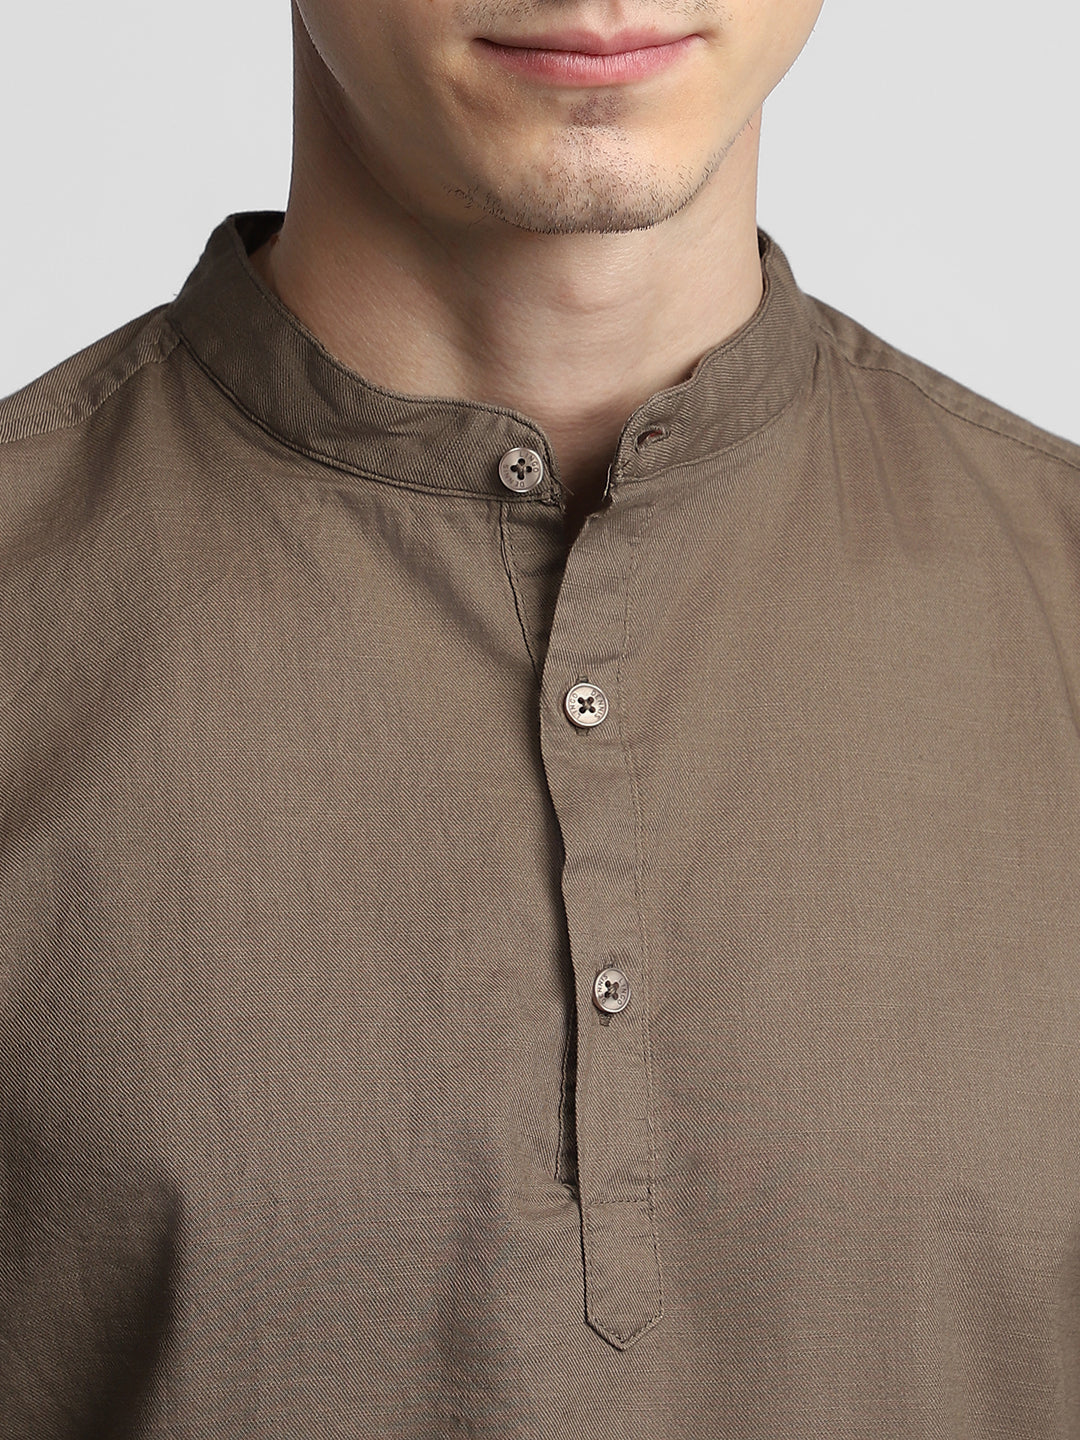 Dennis Lingo Men's Pop Over Mandarin Collar Slim Fit Solid Brown Casual Shirts